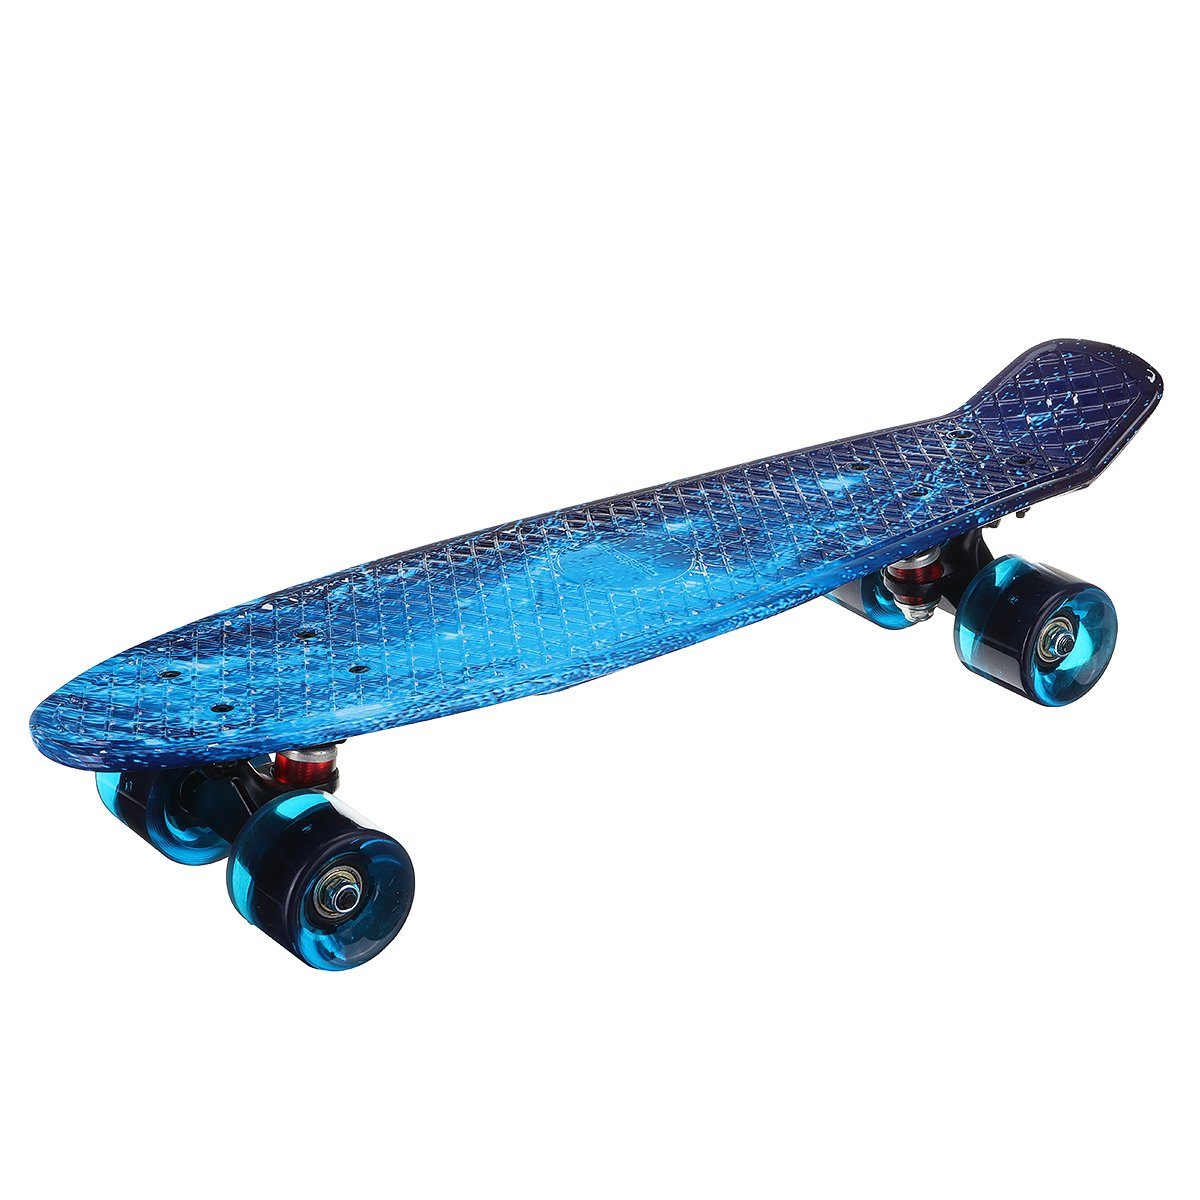 SGODDE Miniskateboard Skateboard, einzigartiger Look, dynamische Lackierung, rutschfest, hochwertig